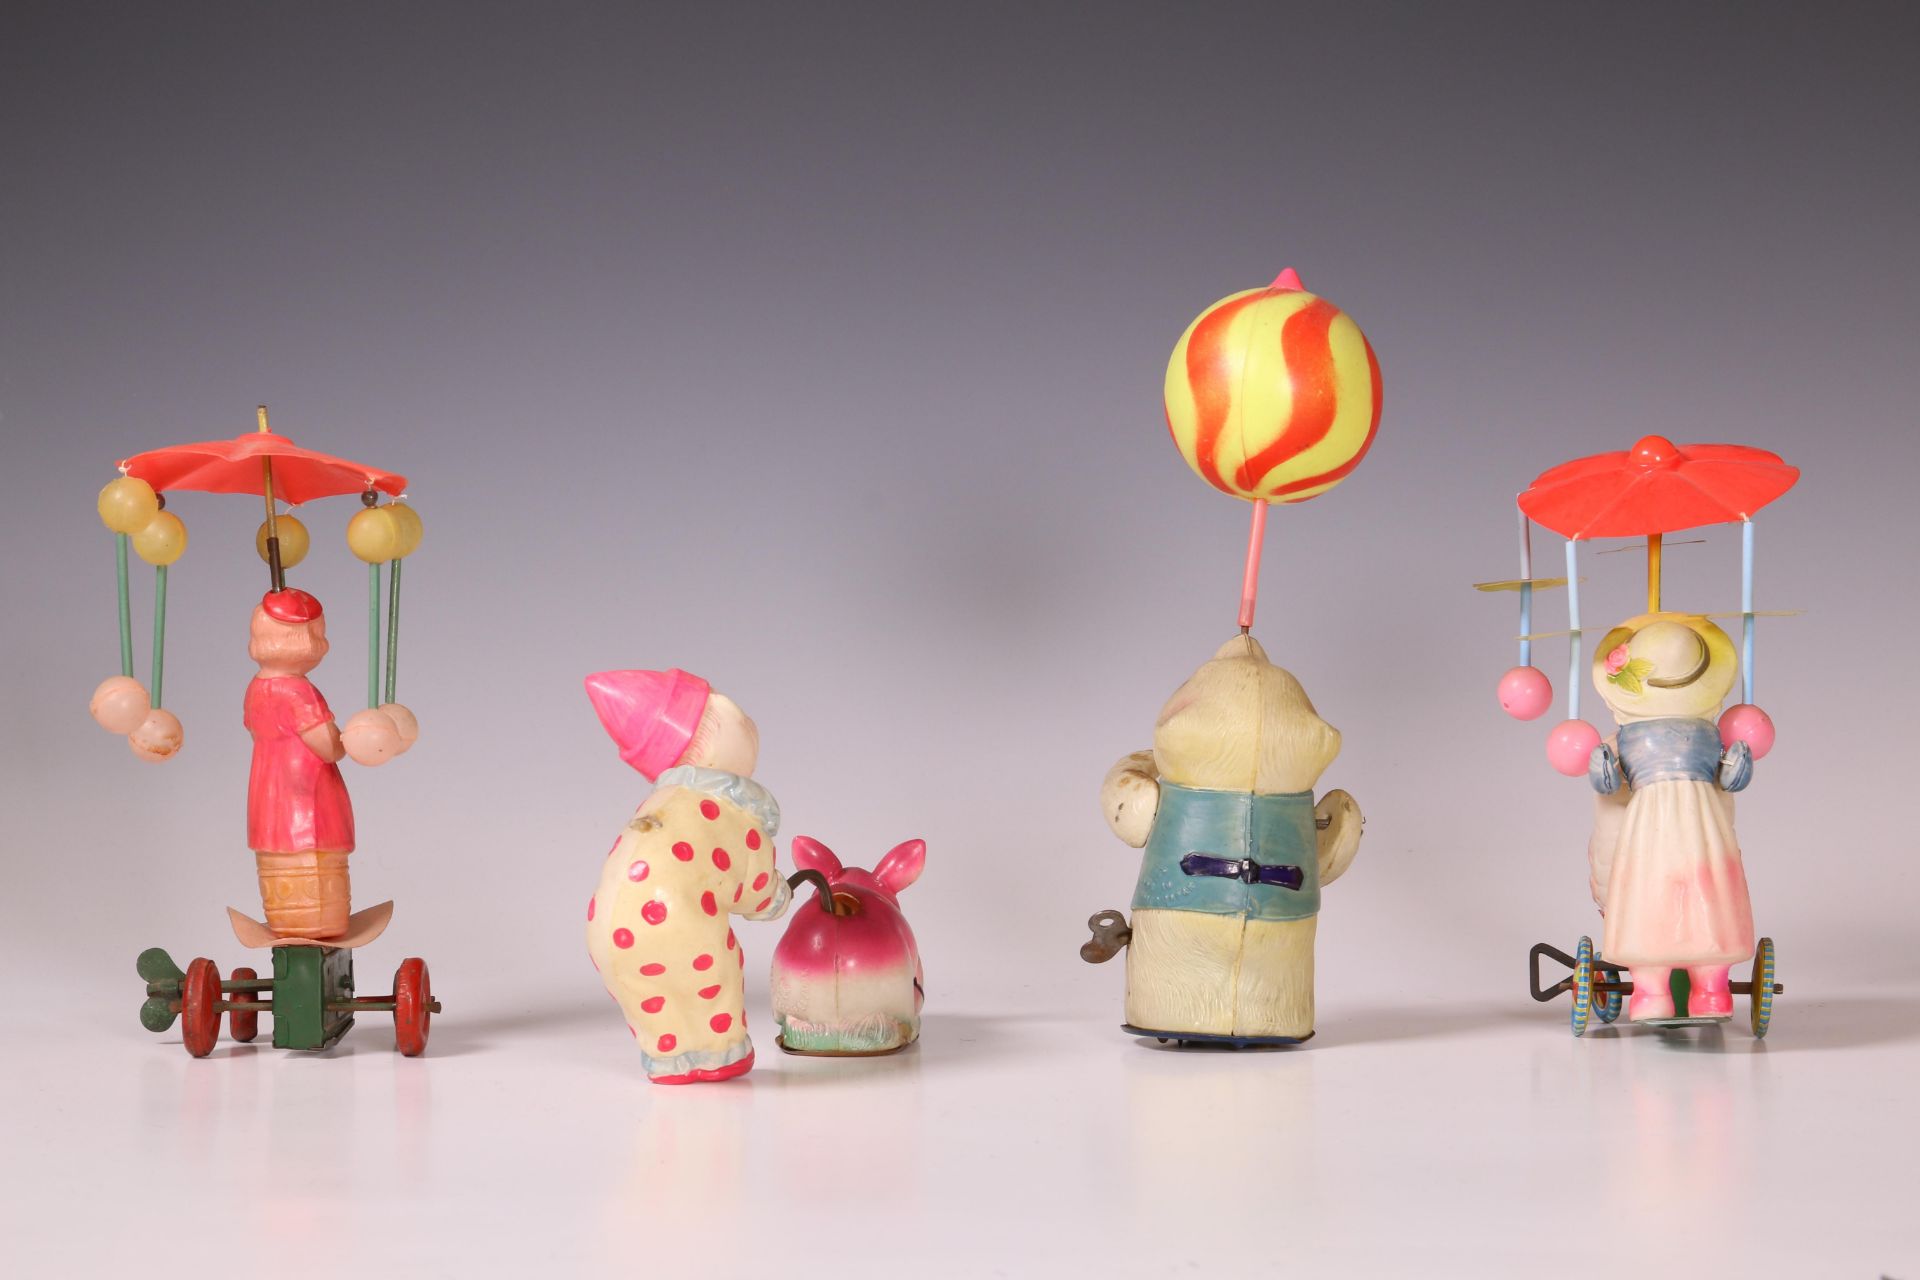 Japan, vier stuks celluloid speelgoed, ca. 1940-1950. - Bild 4 aus 19